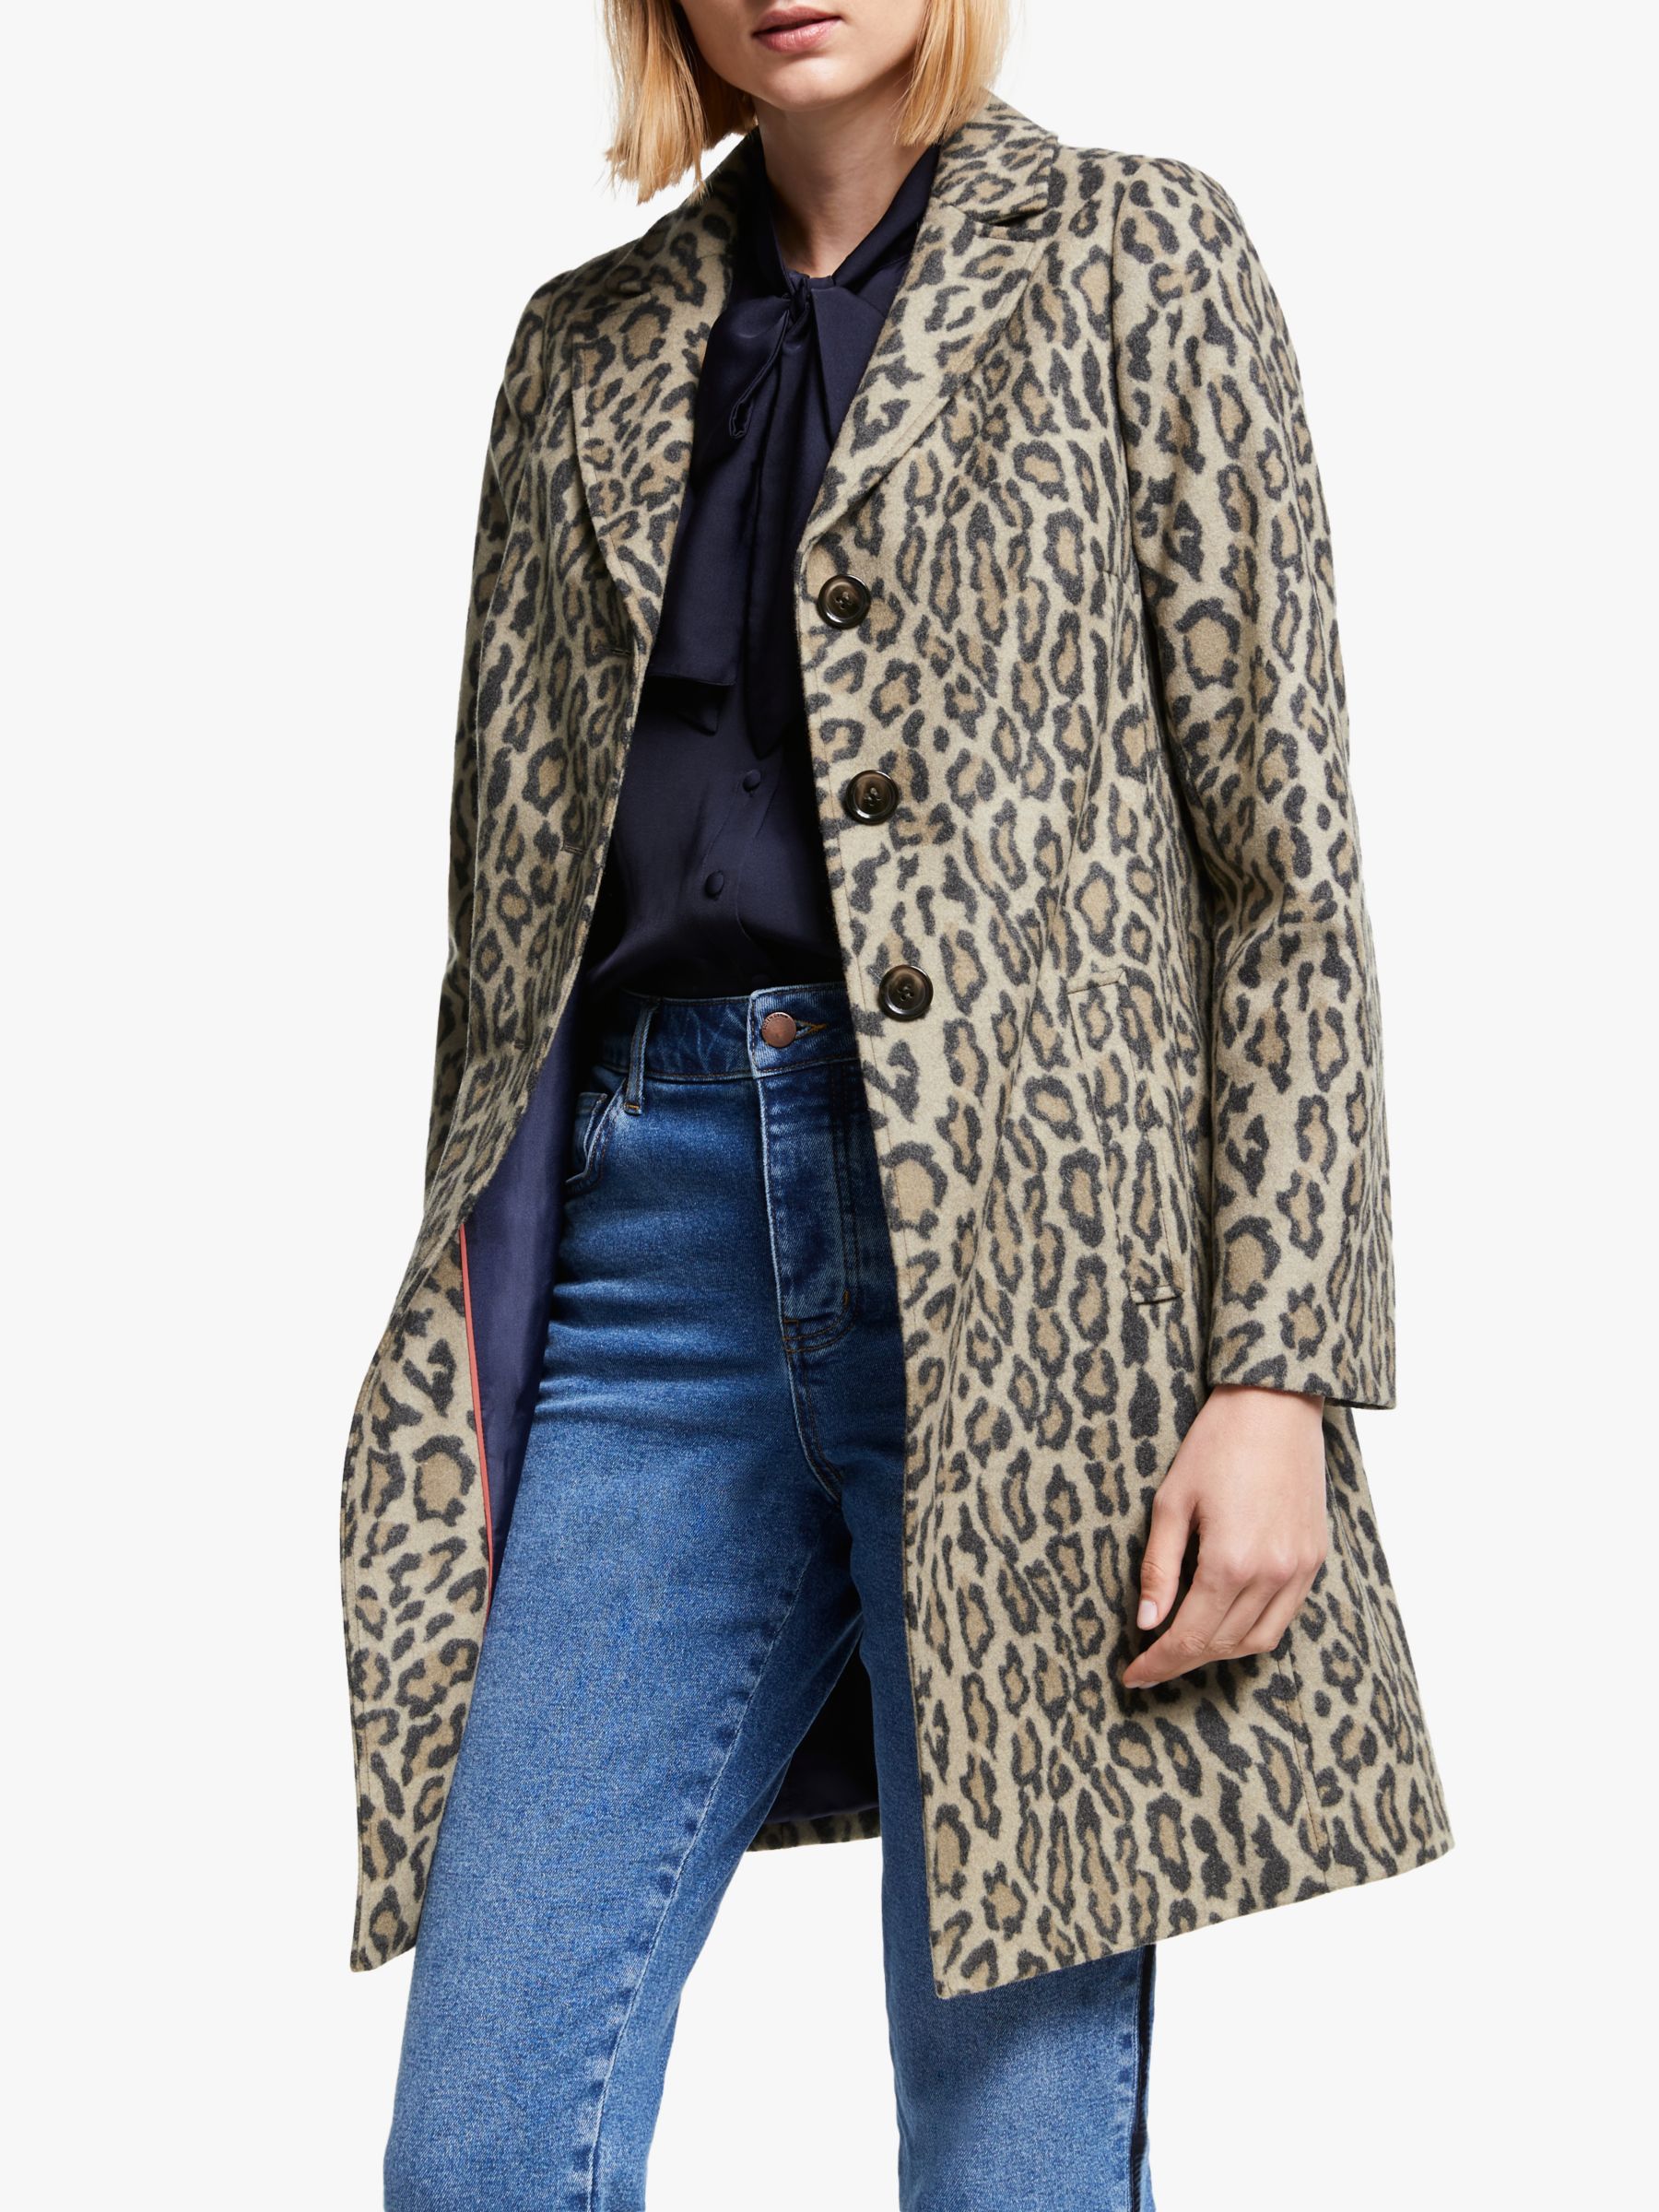 Boden Stanhope Animal Print Tailored Coat, Leopard